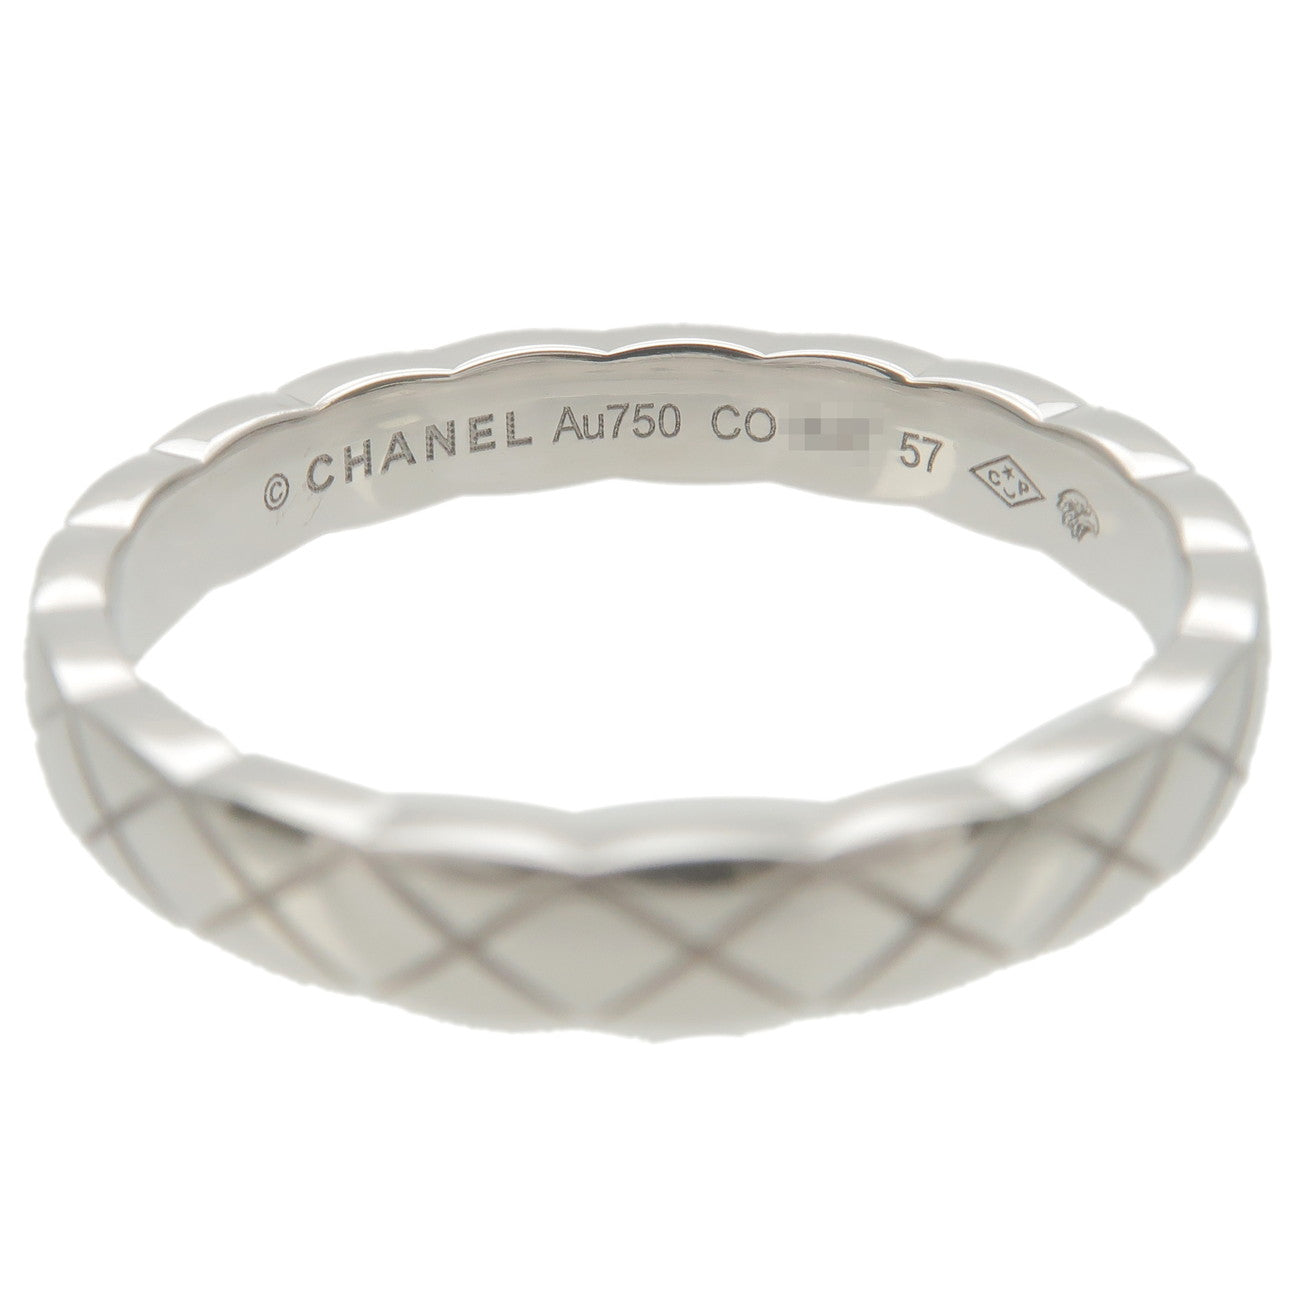 CHANEL Coco Crush Mini Ring K18WG 750WG White Gold #57 US8 EU57